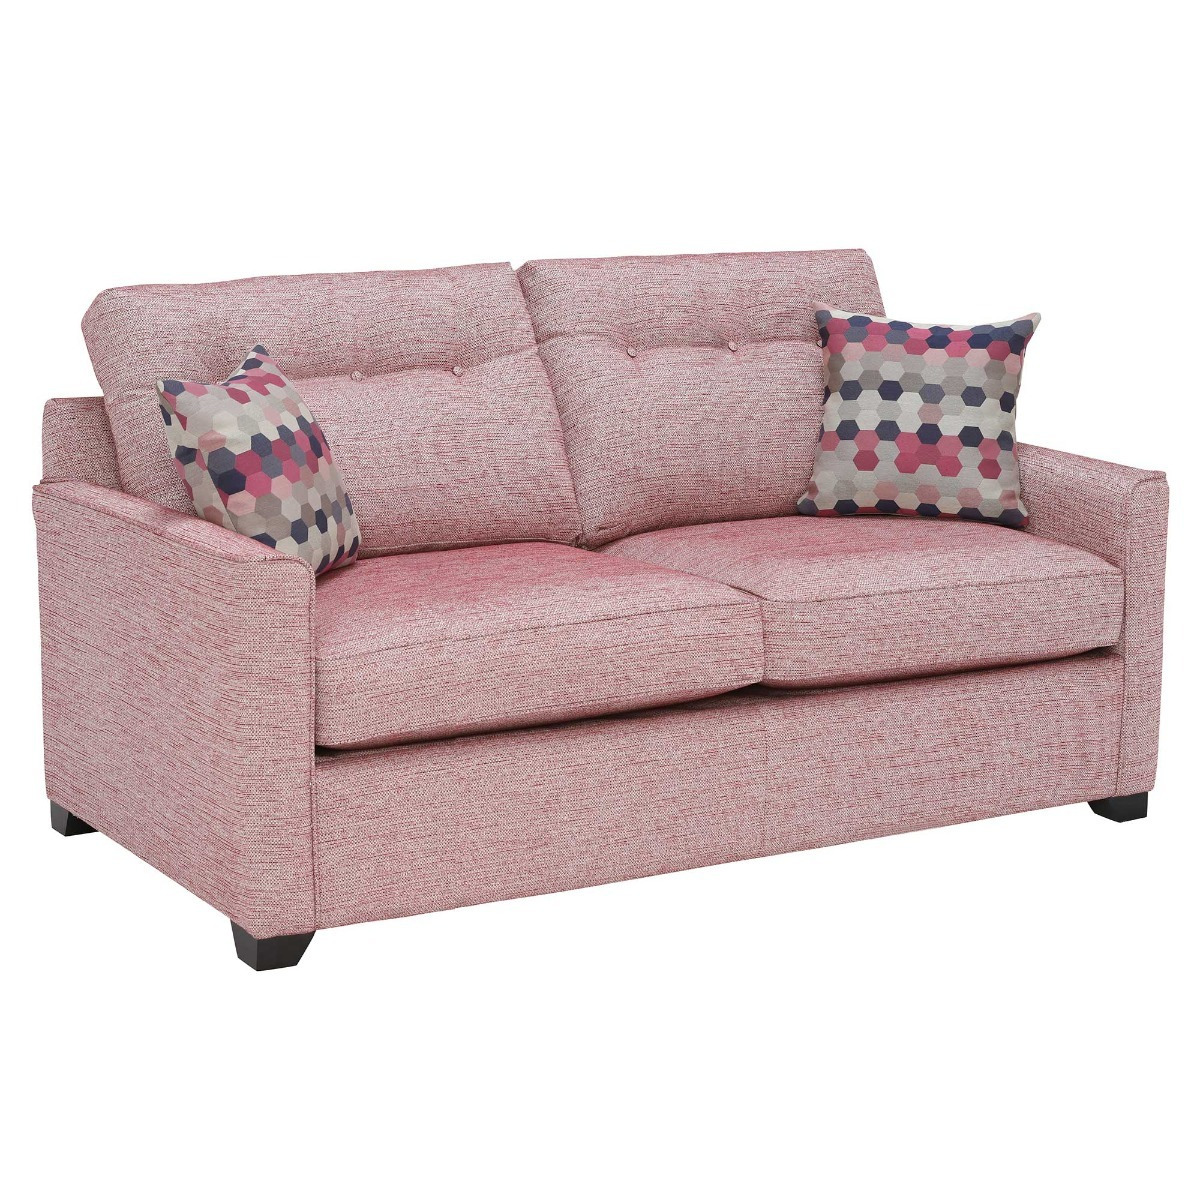 Holkham 3 Seater Sofa Bed Fabric - Barker & Stonehouse